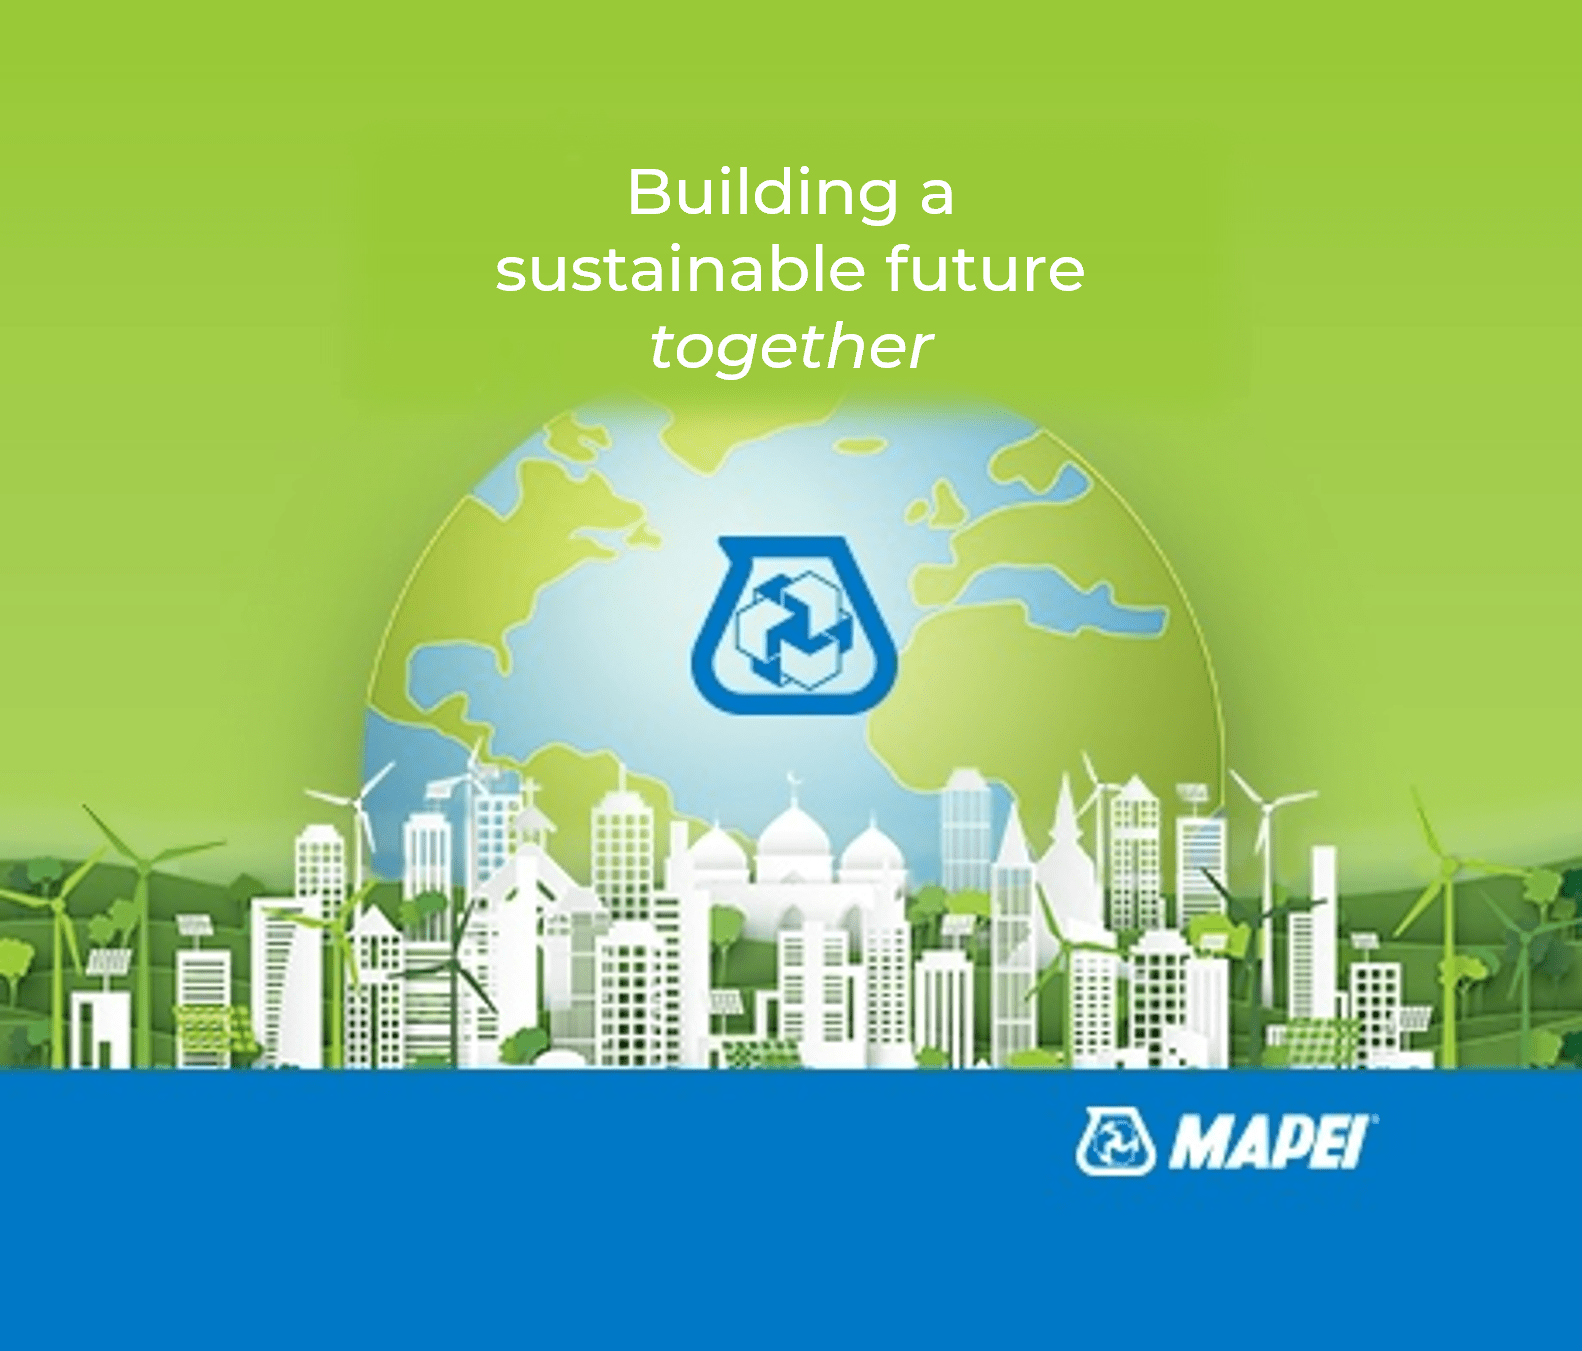 Mapei's Sustainability Initiatives